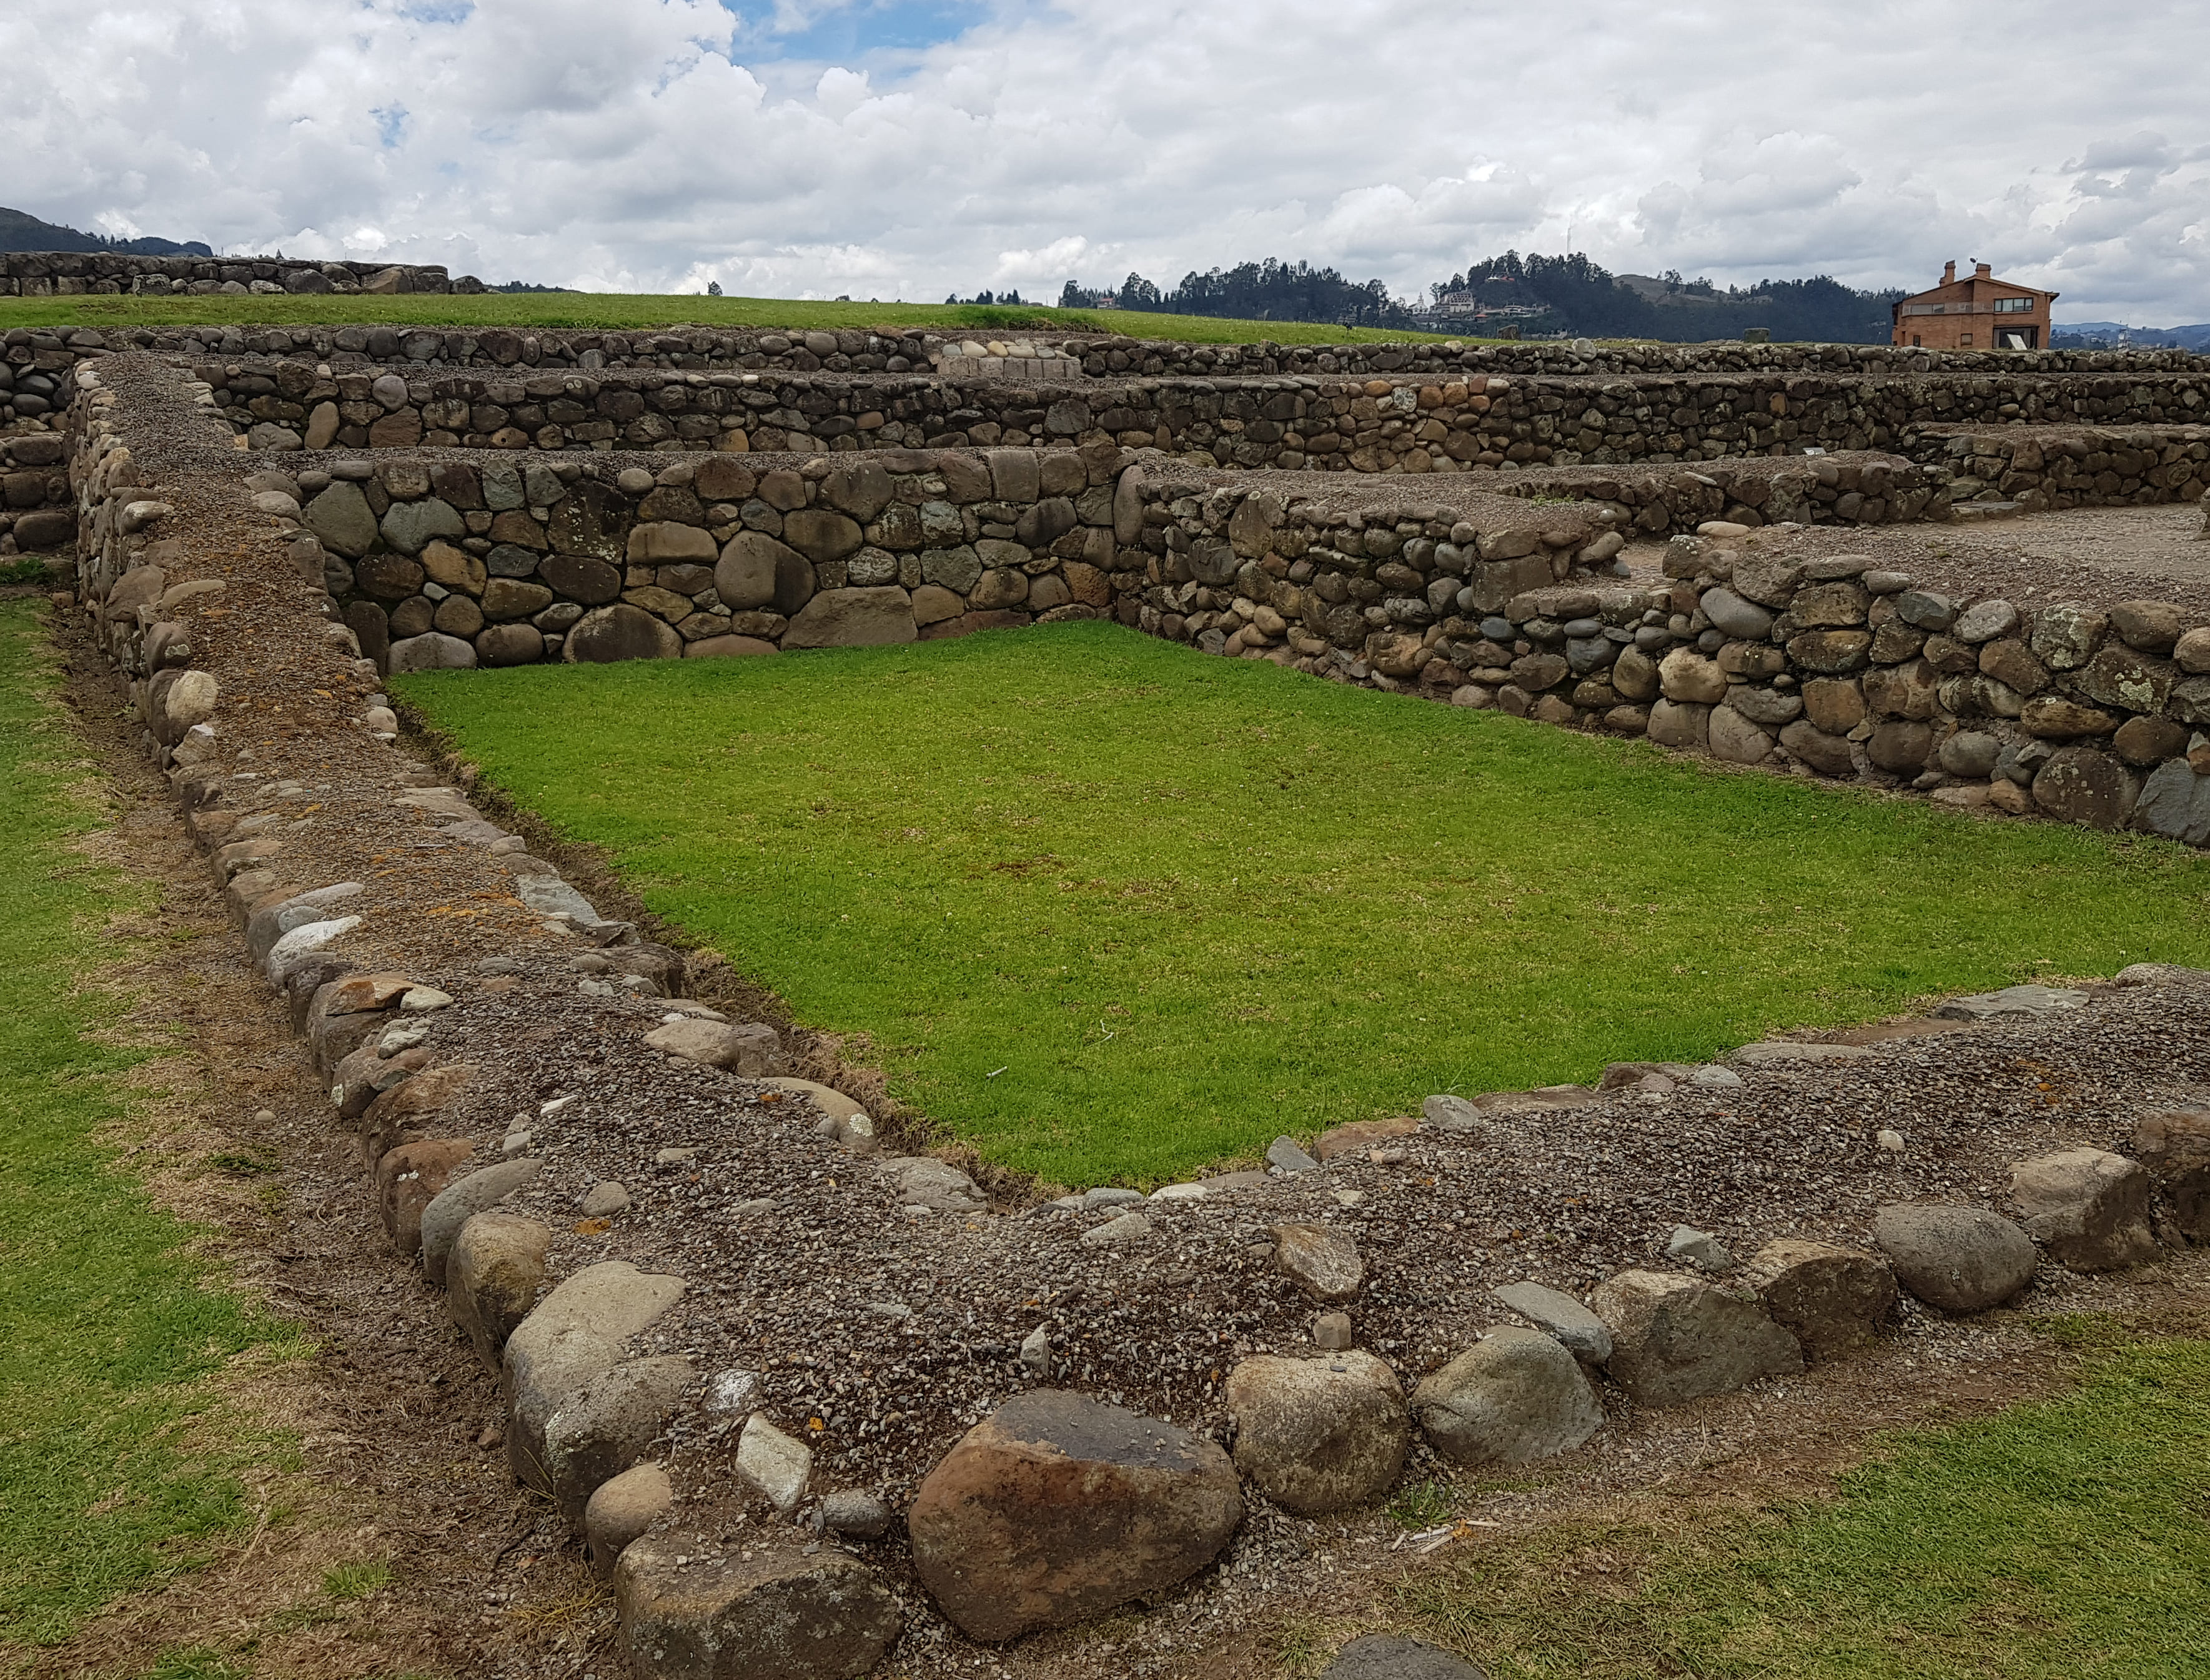 Periodo Inka: La expansión del Tawantinsuyu